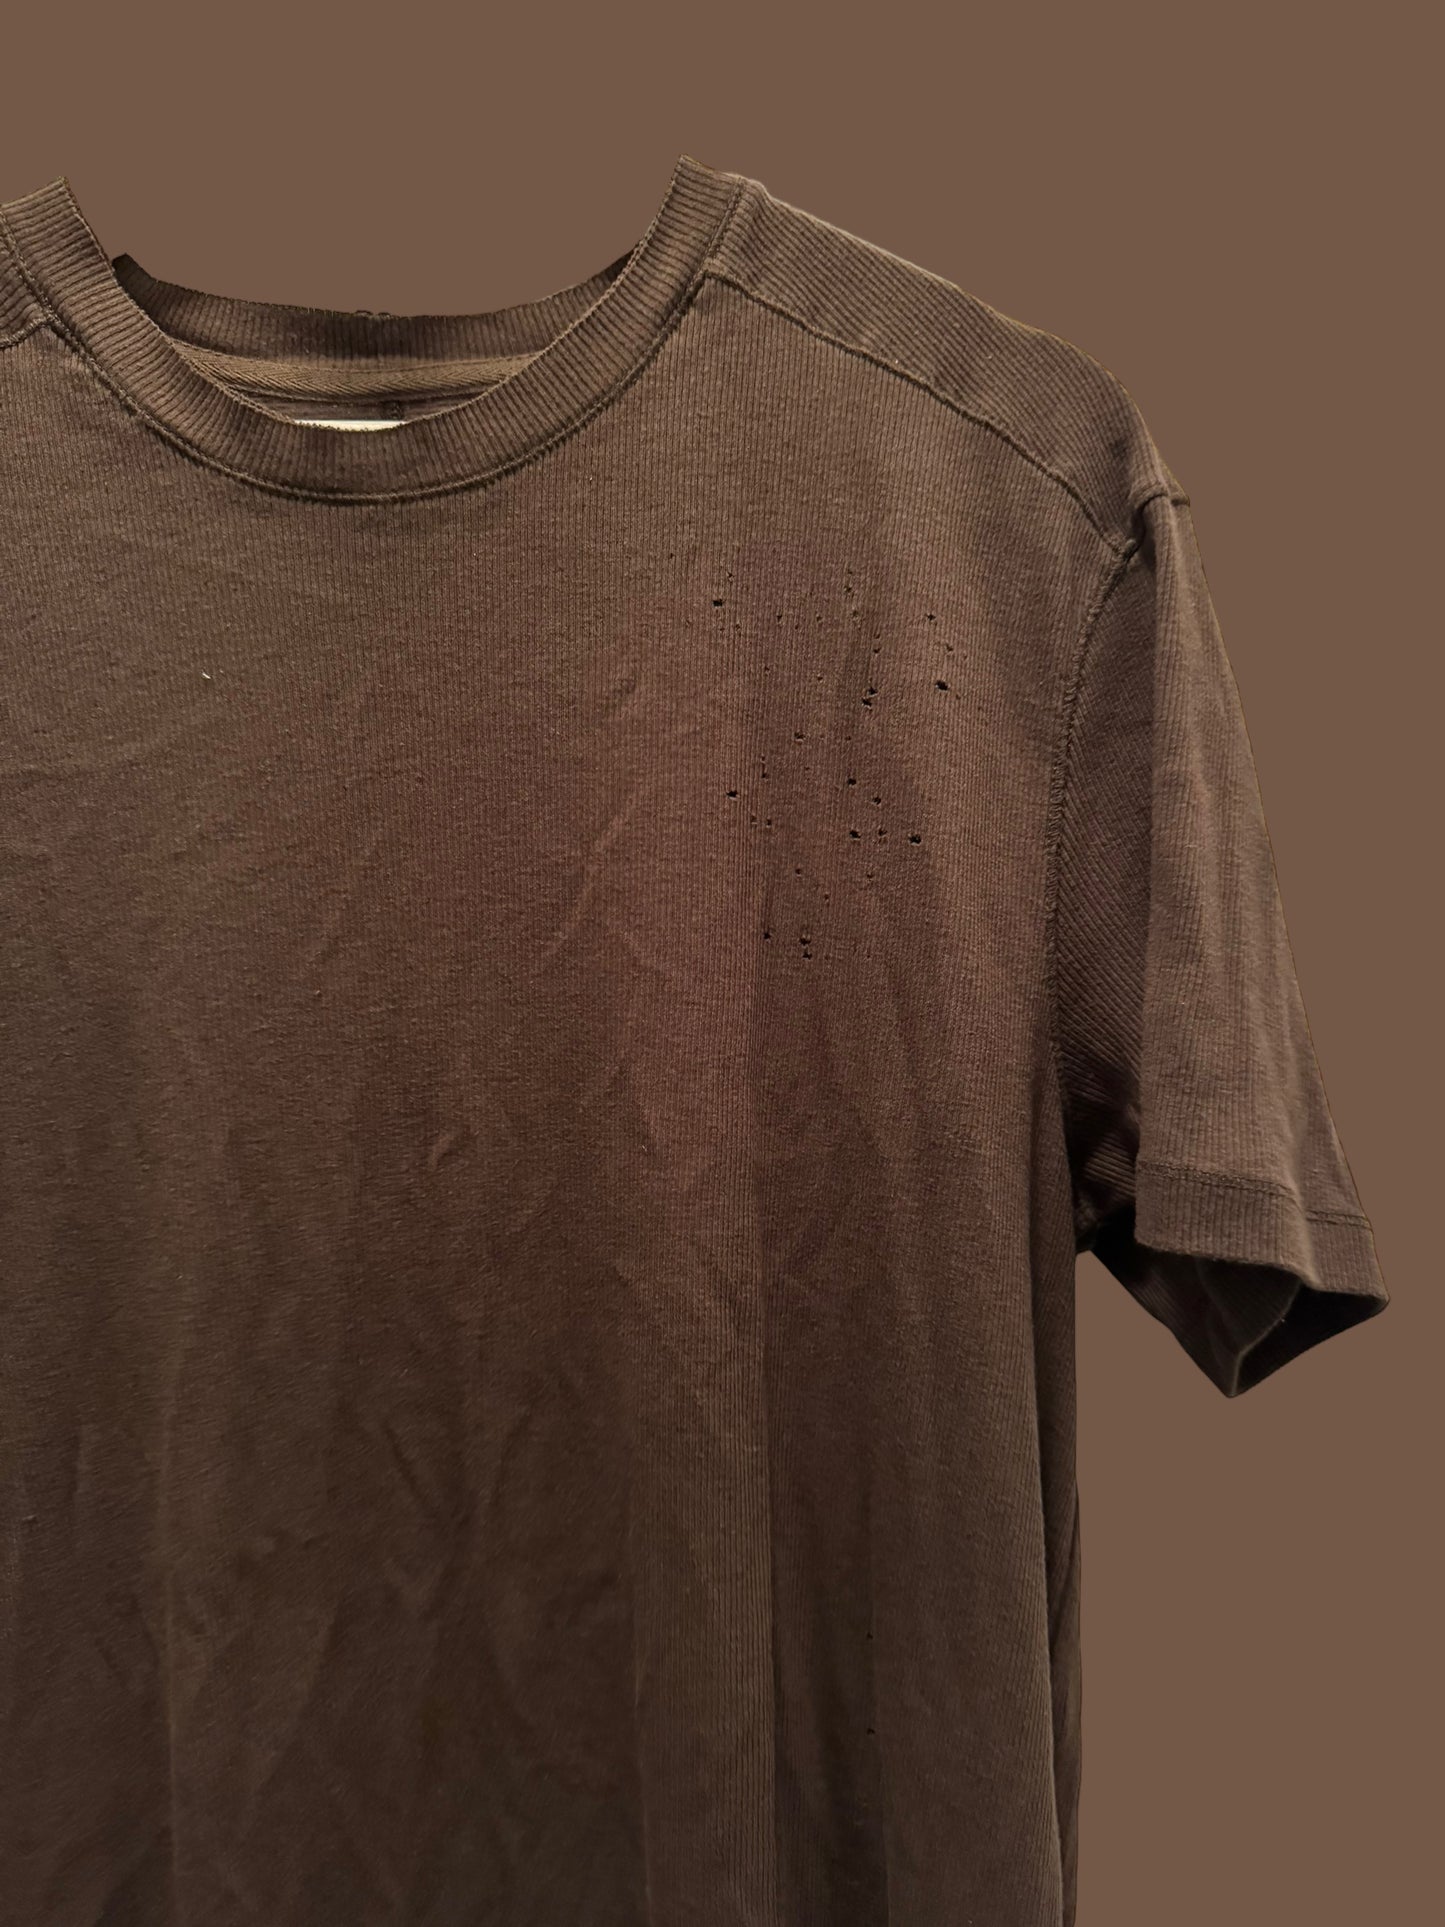 mens ALL SAINTS brown distressed t-shirt size medium